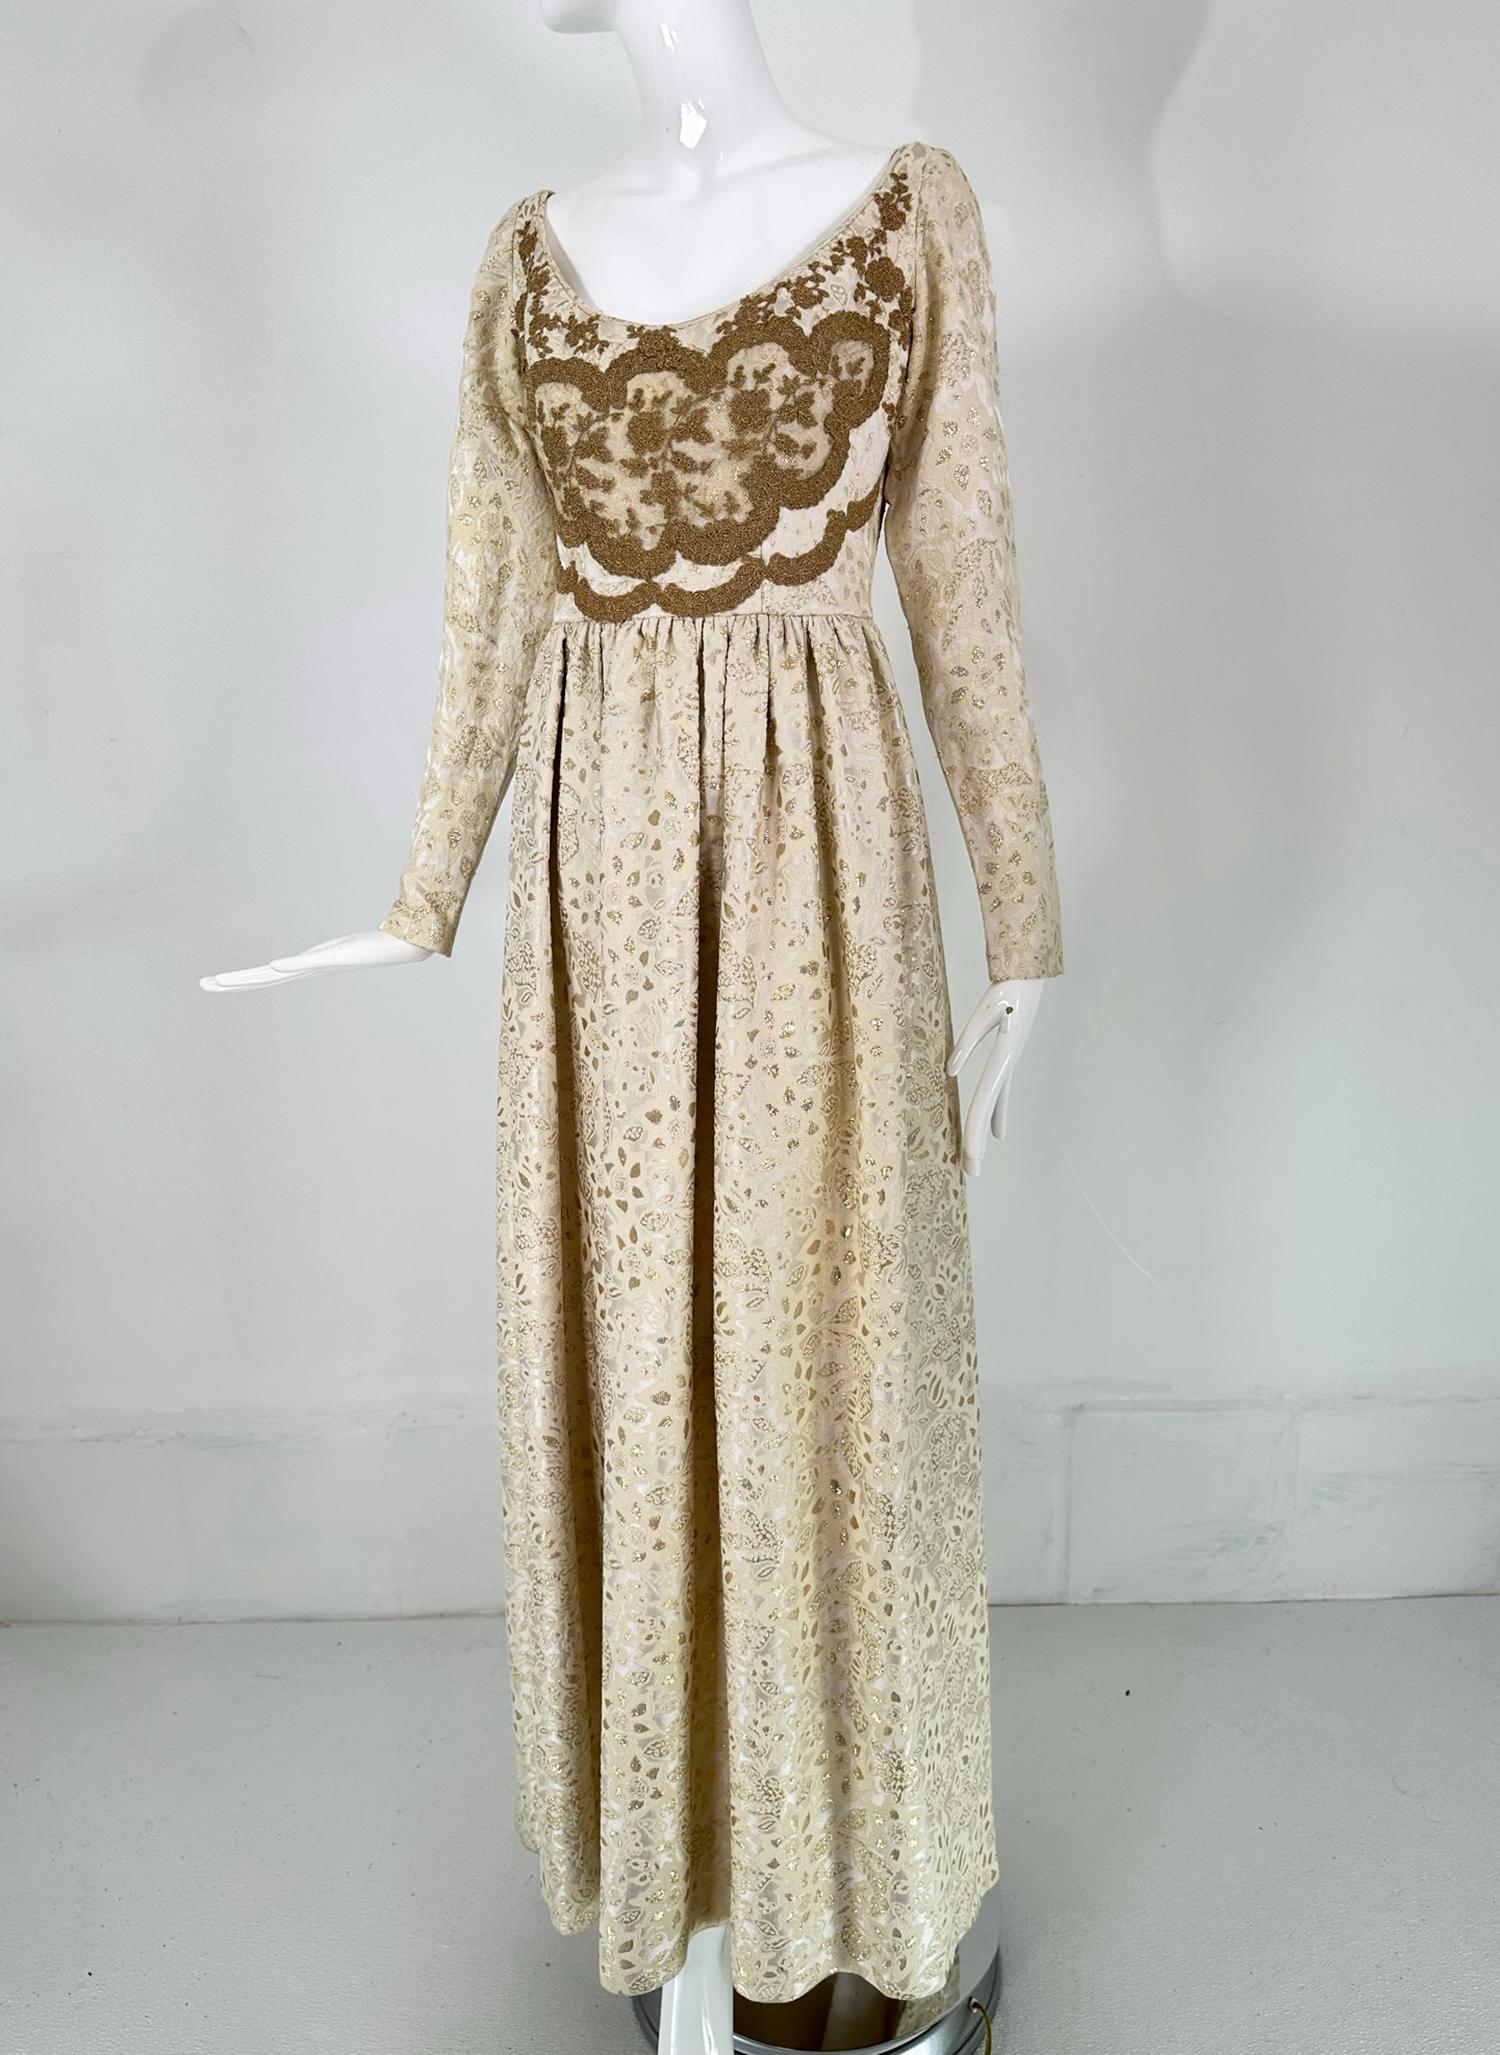 Galitizne Couture Renaissance Style Gown in Cream & Gold Metallic Brocade 1970s For Sale 8